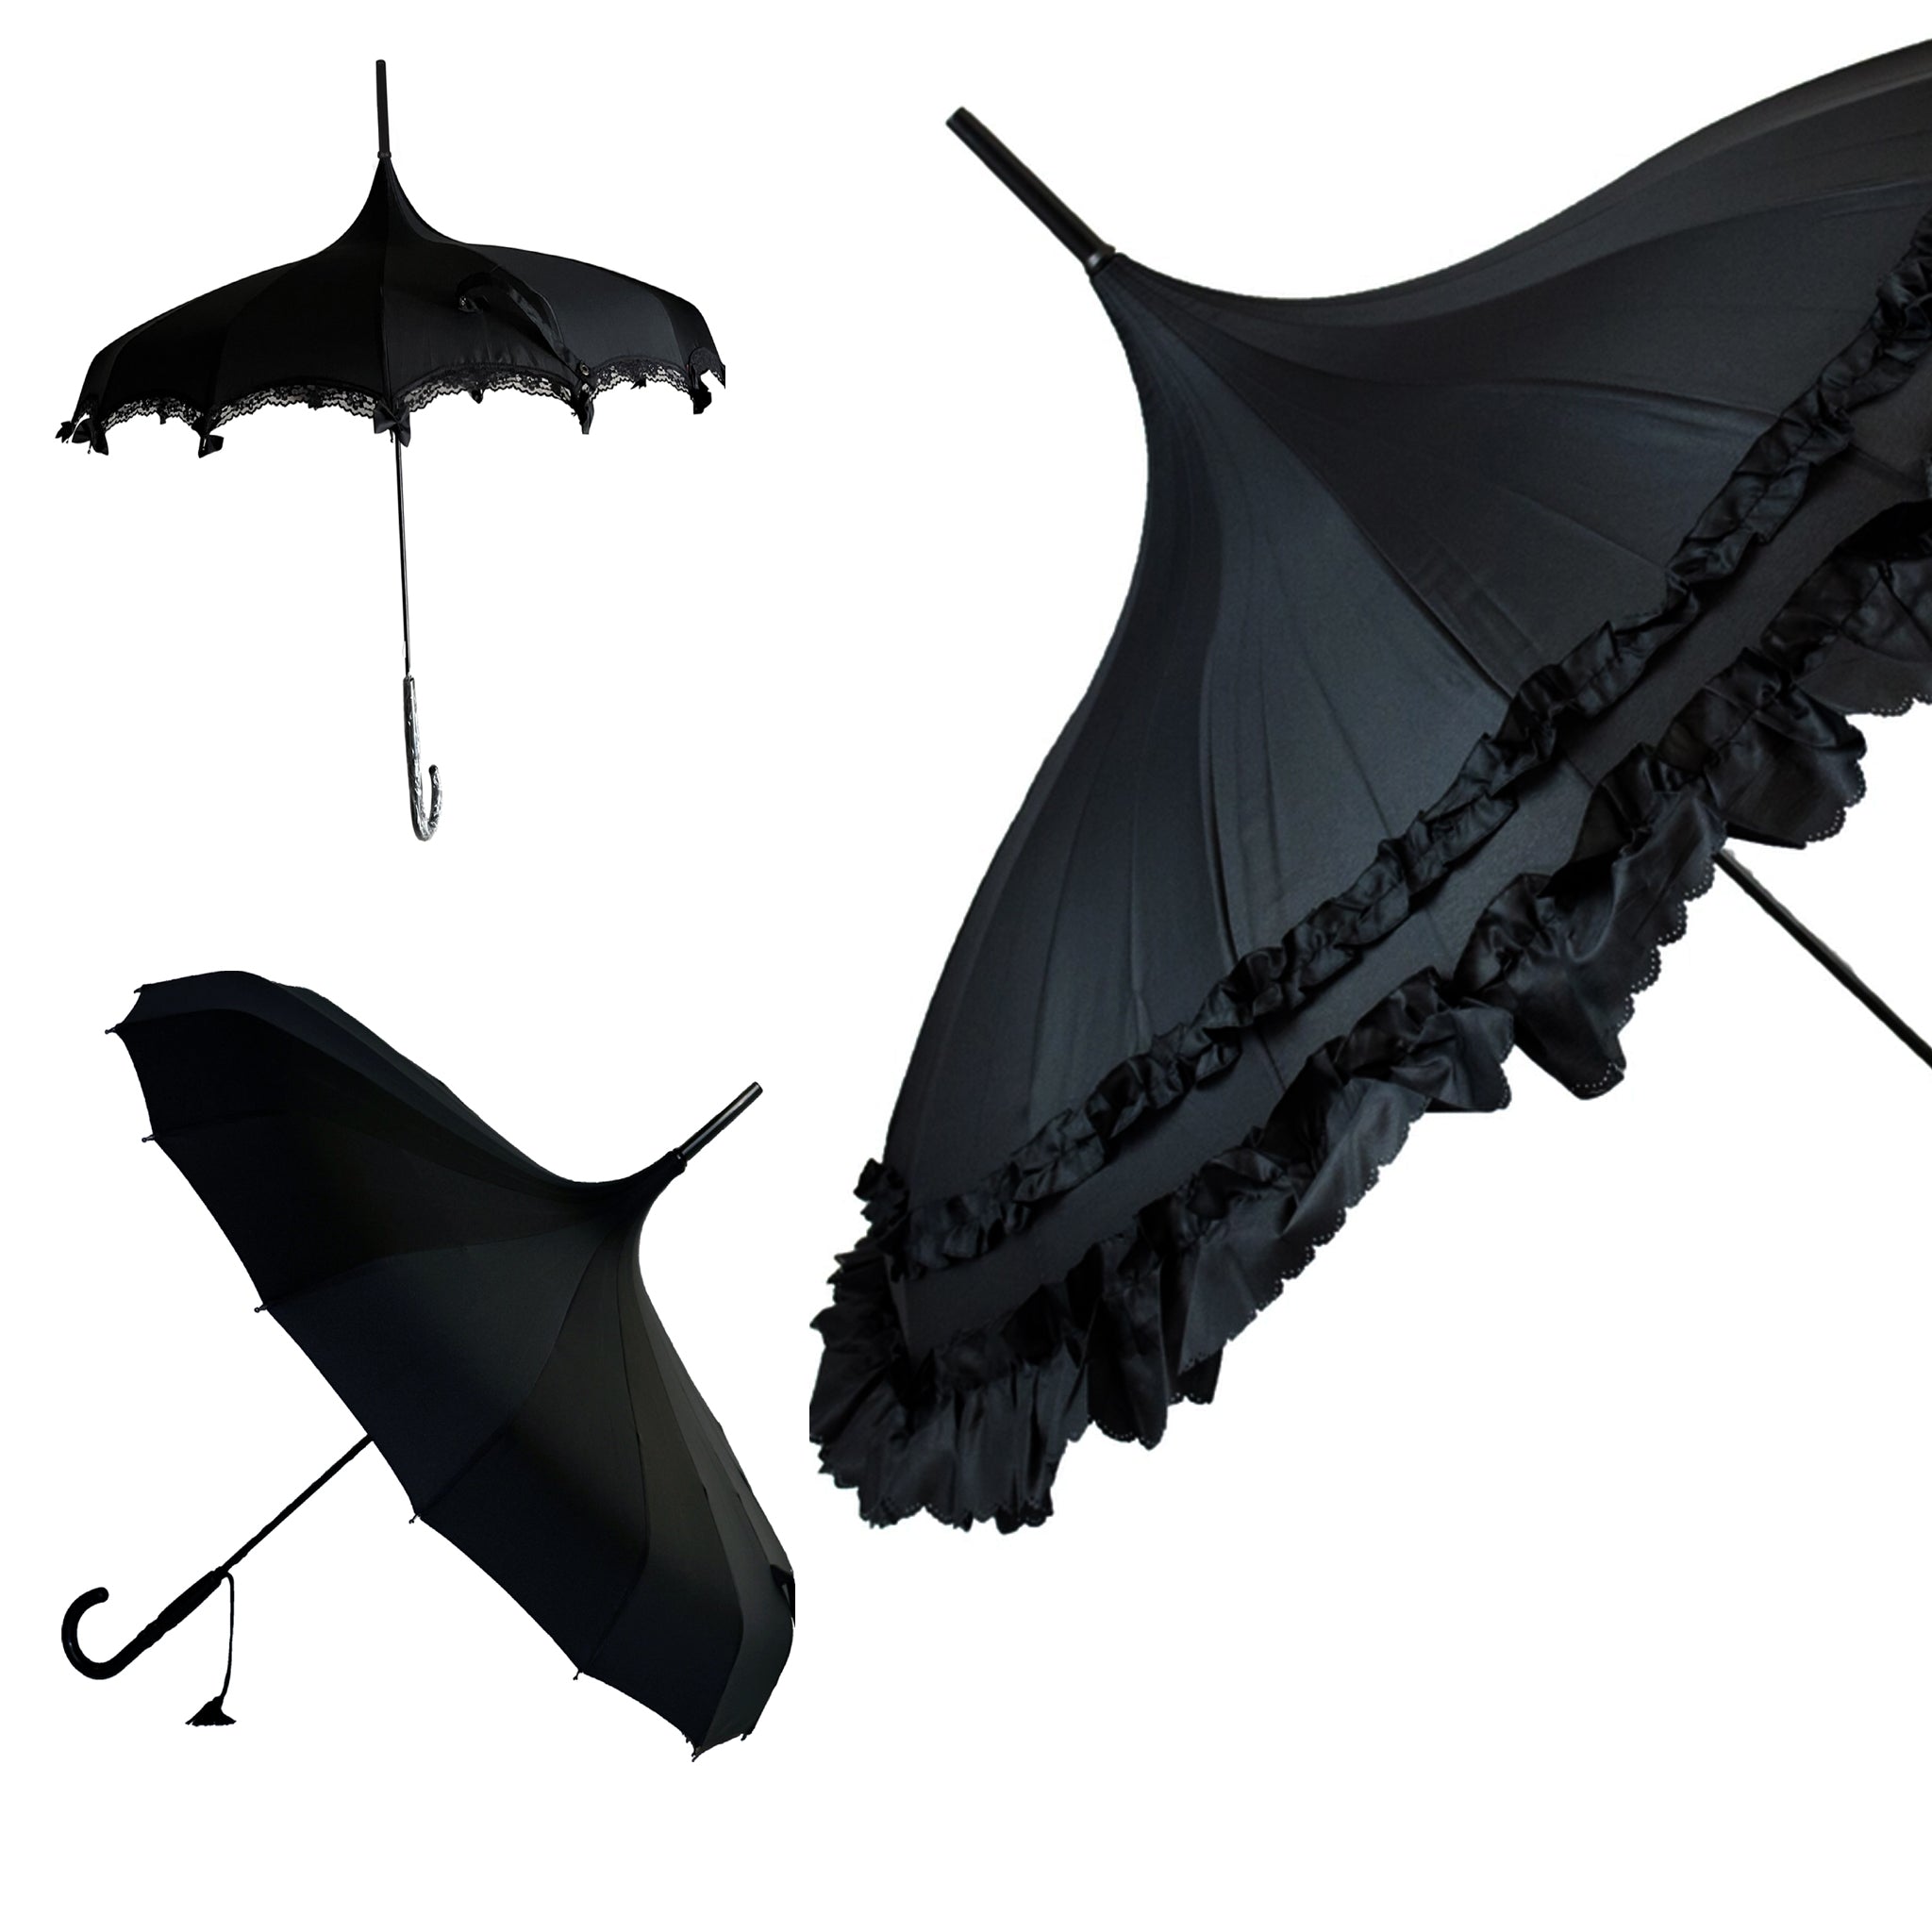 Gorey umbrella